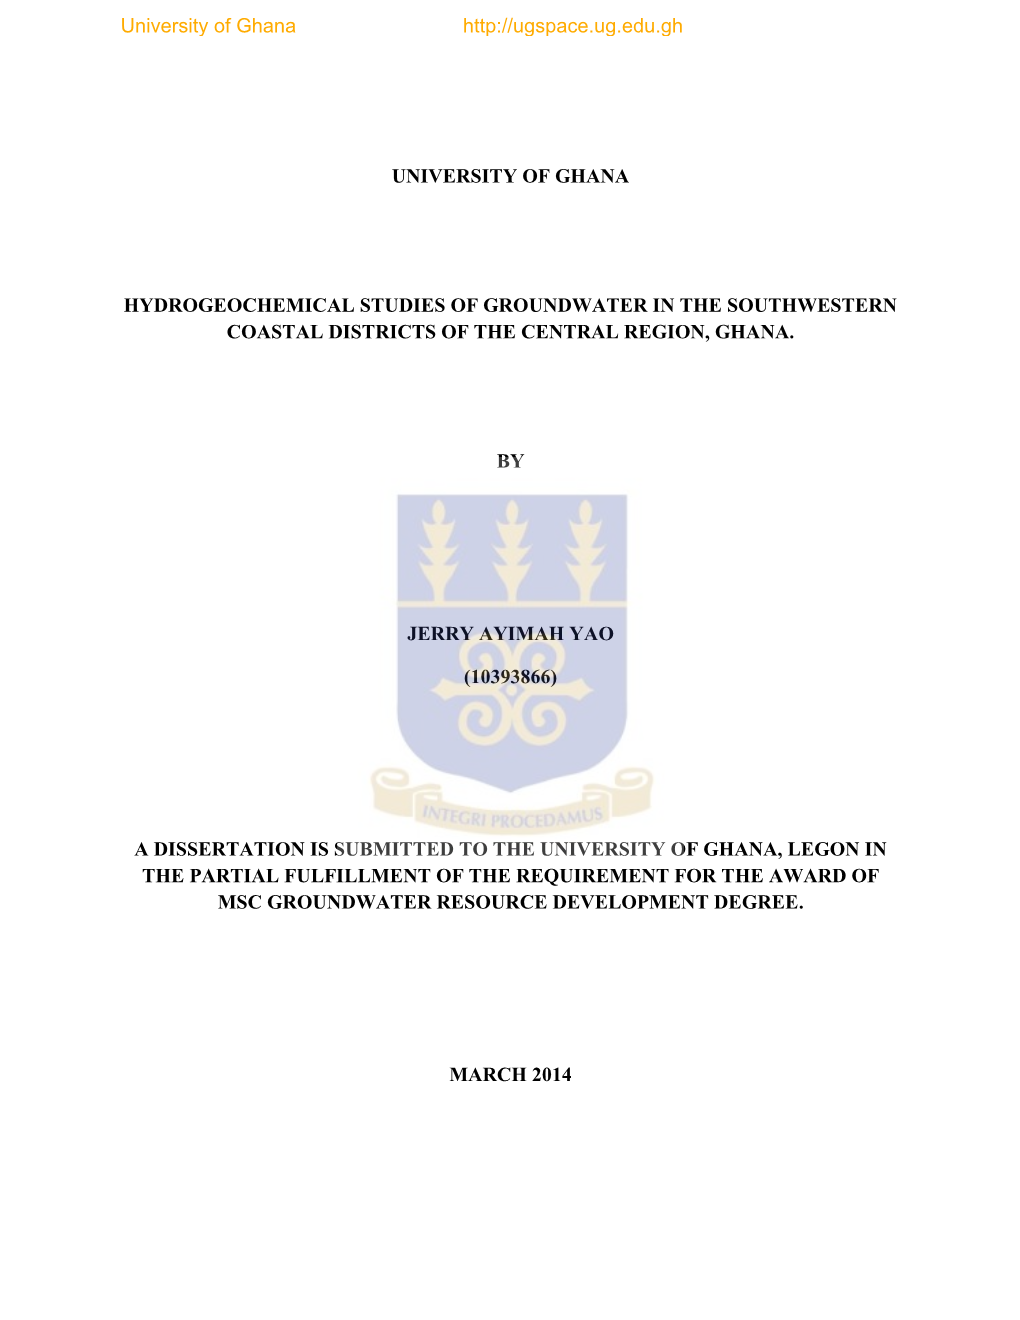 University of Ghana Hydrogeochemical Studies